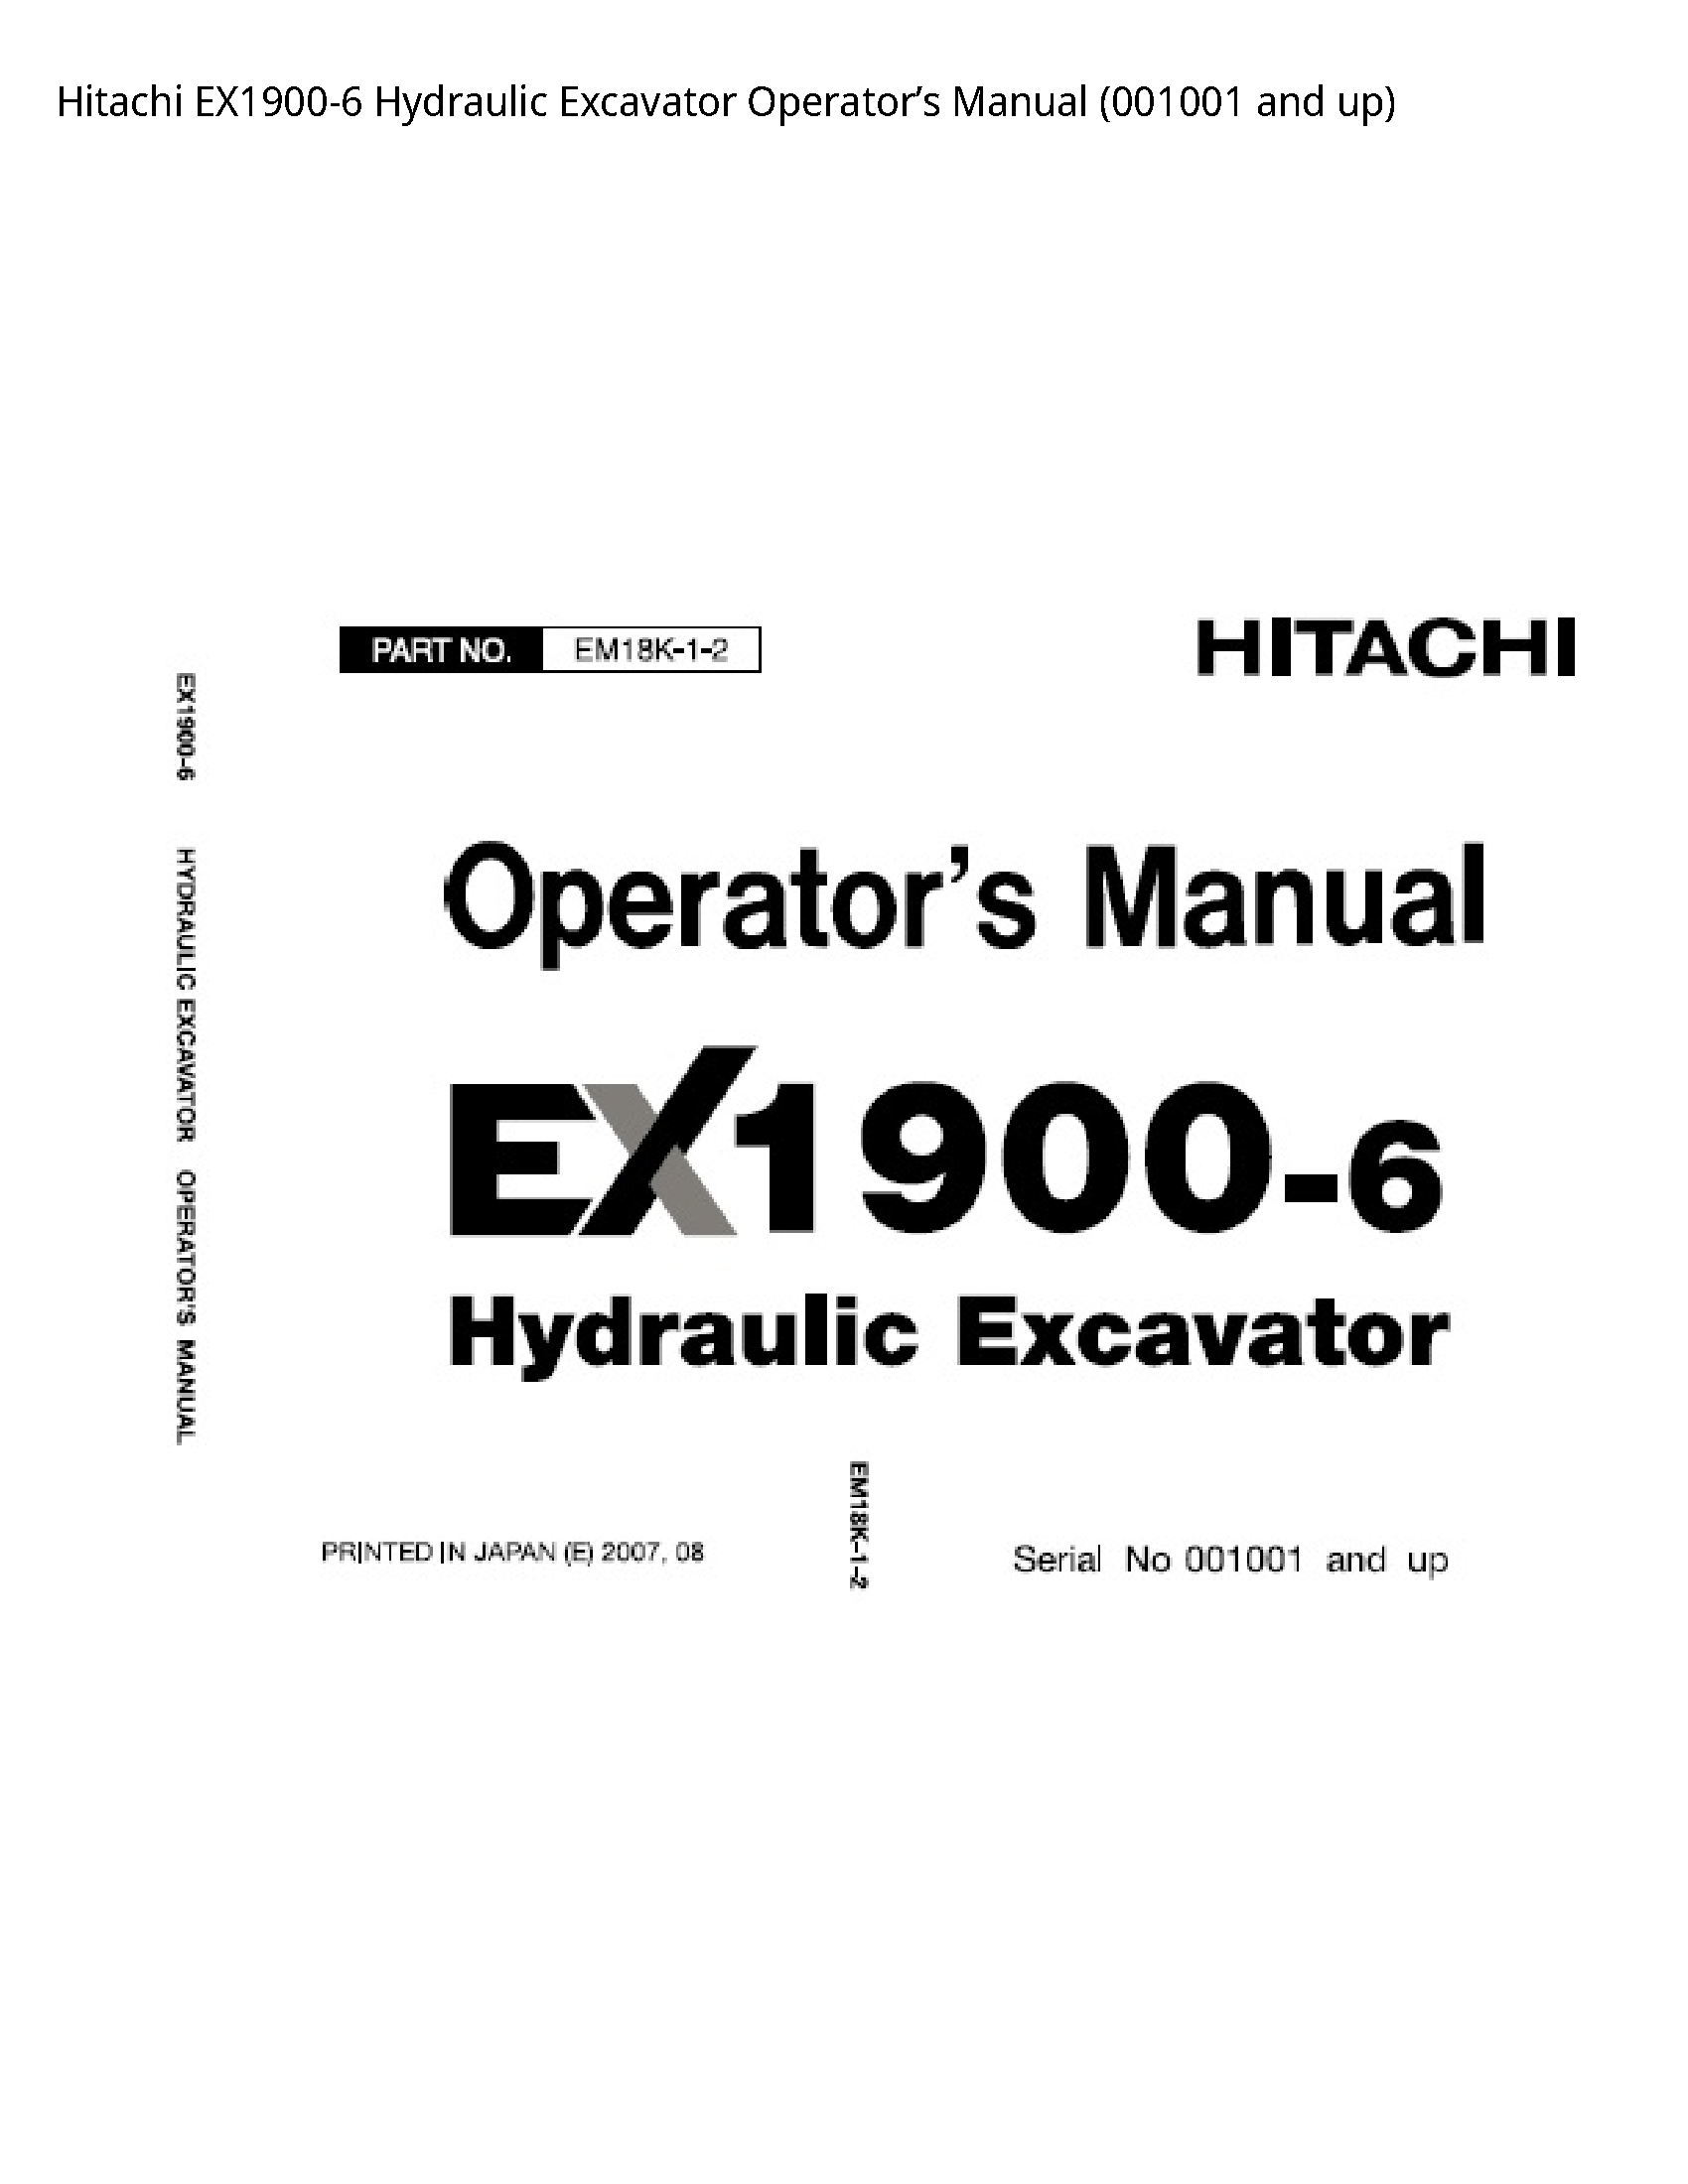 Hitachi EX1900-6 Hydraulic Excavator Operator’s manual